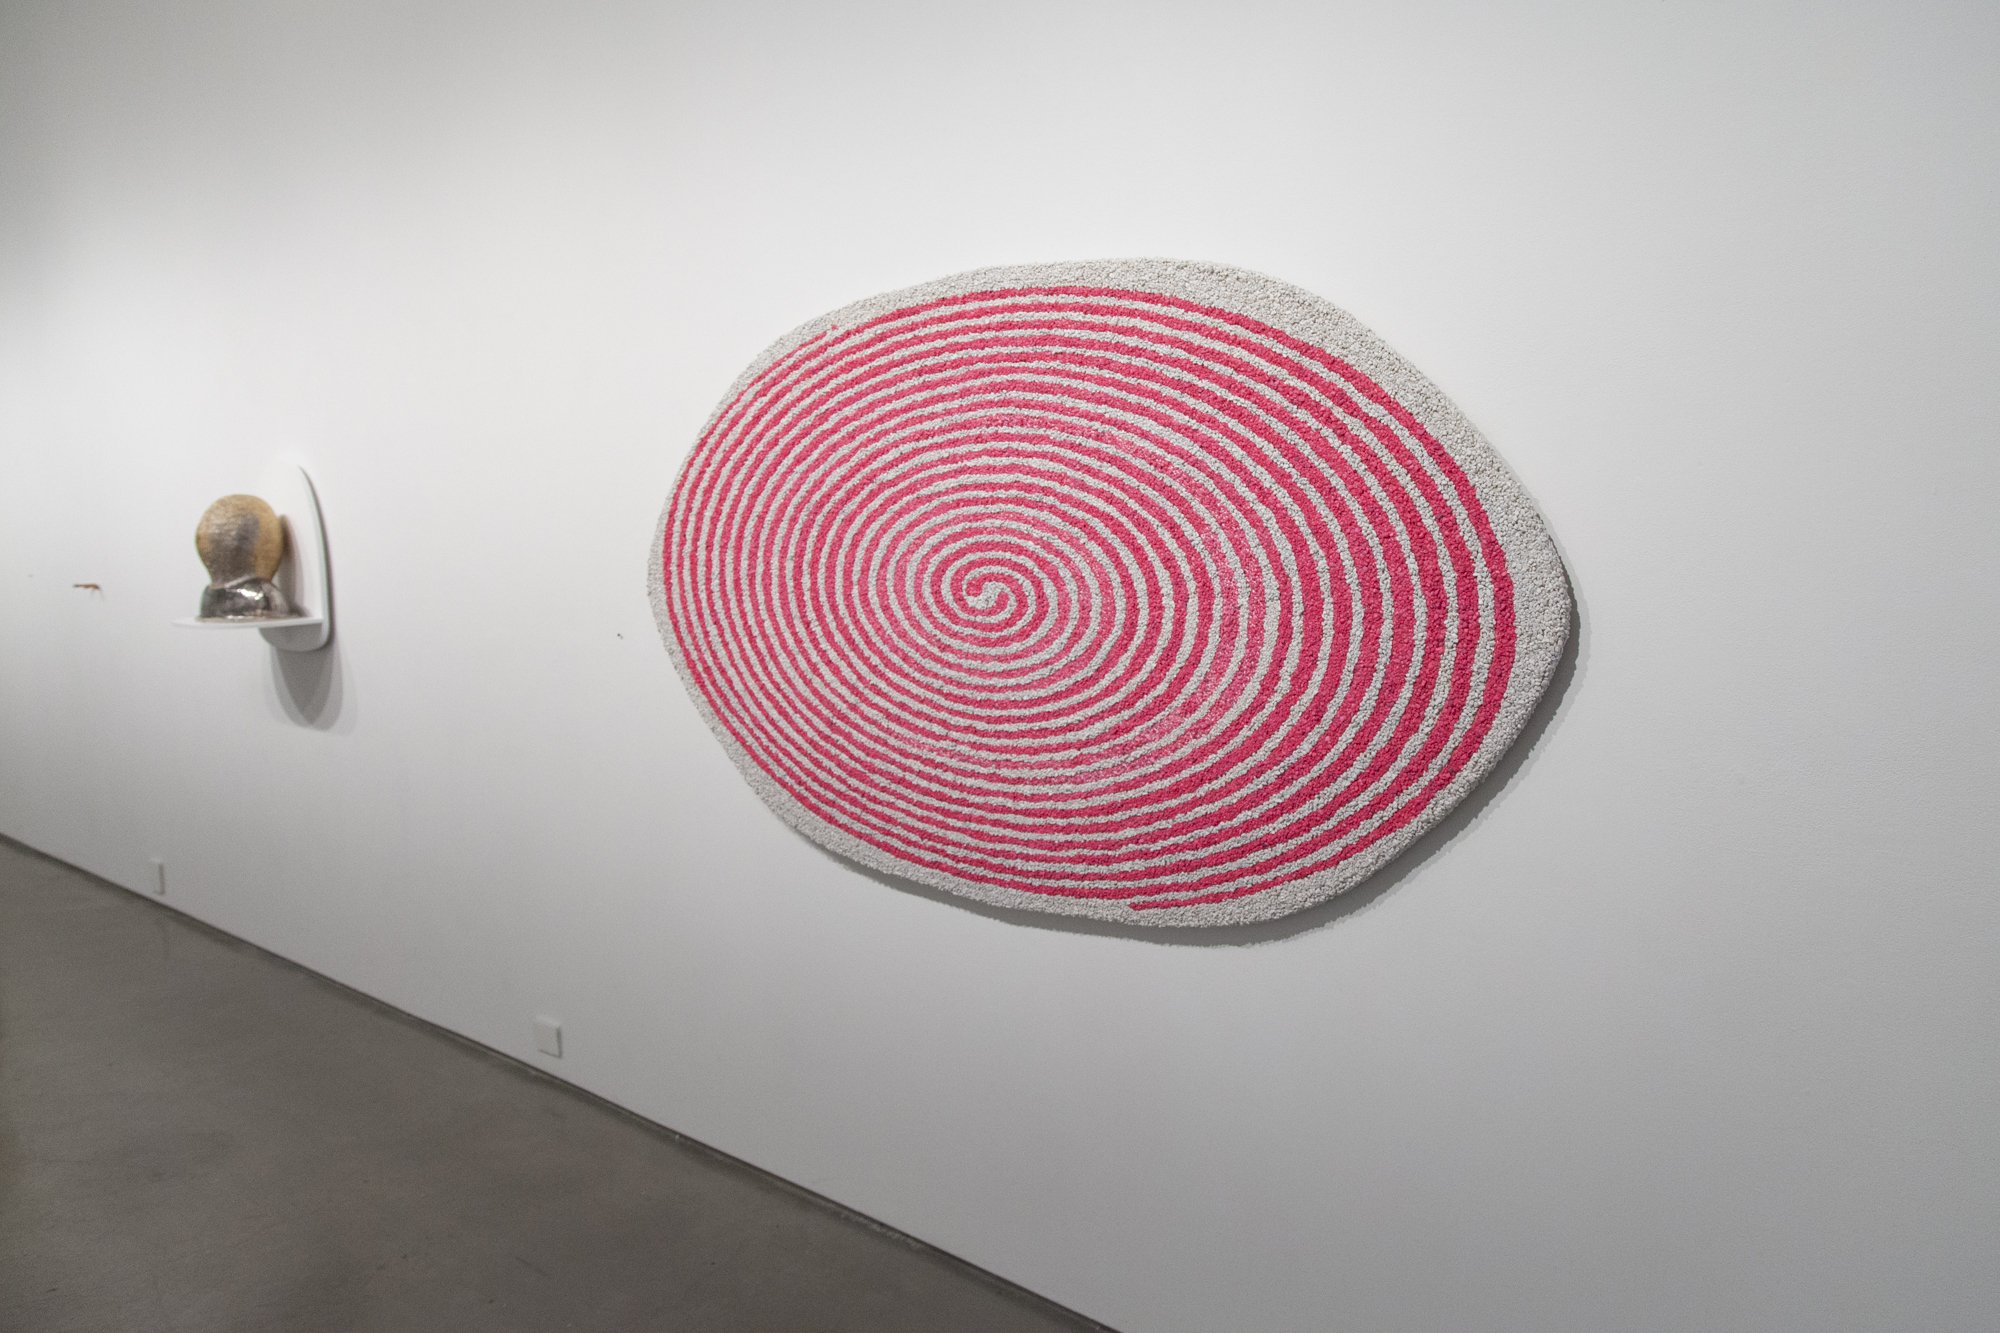  Never Getting Too Close (Pink Spiral) Plywood, Aquarium rock, Adhesive 47” x 83” x 2” 2015 